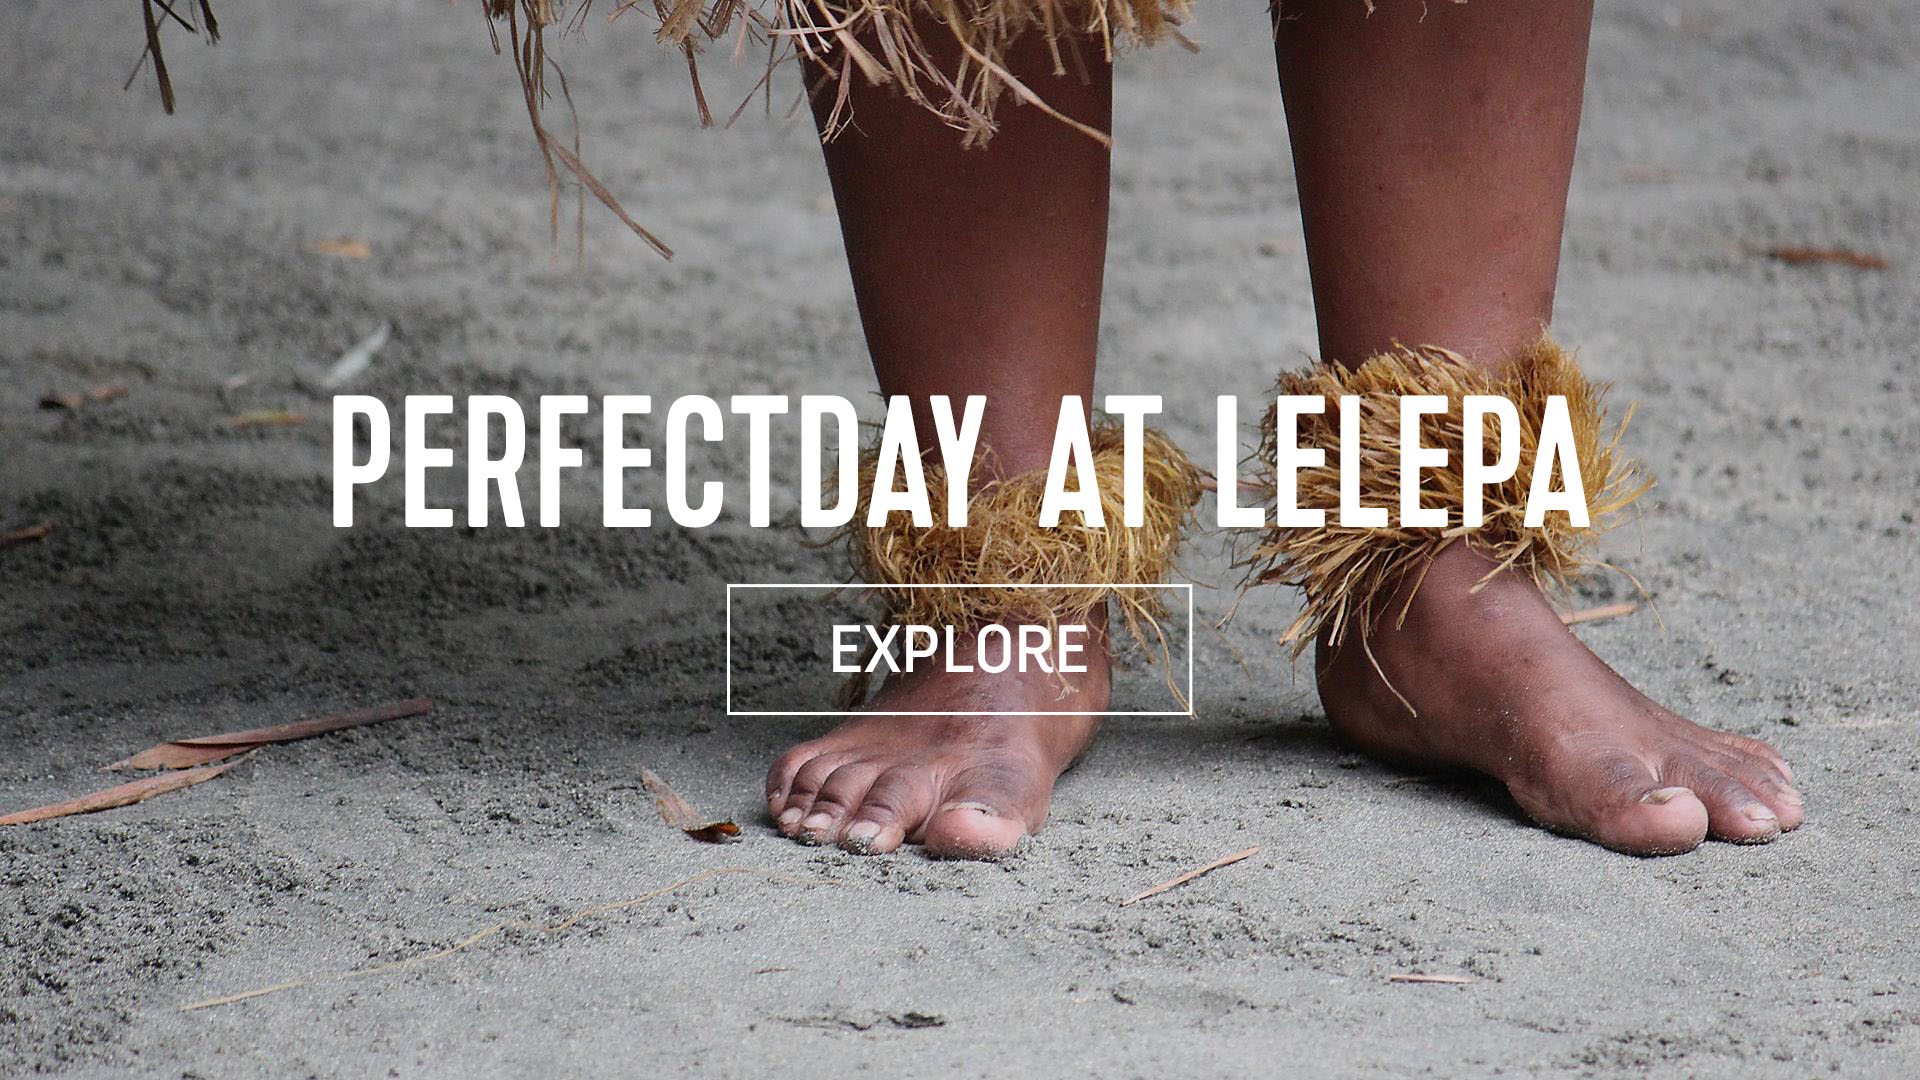 Perfect day at lelepa